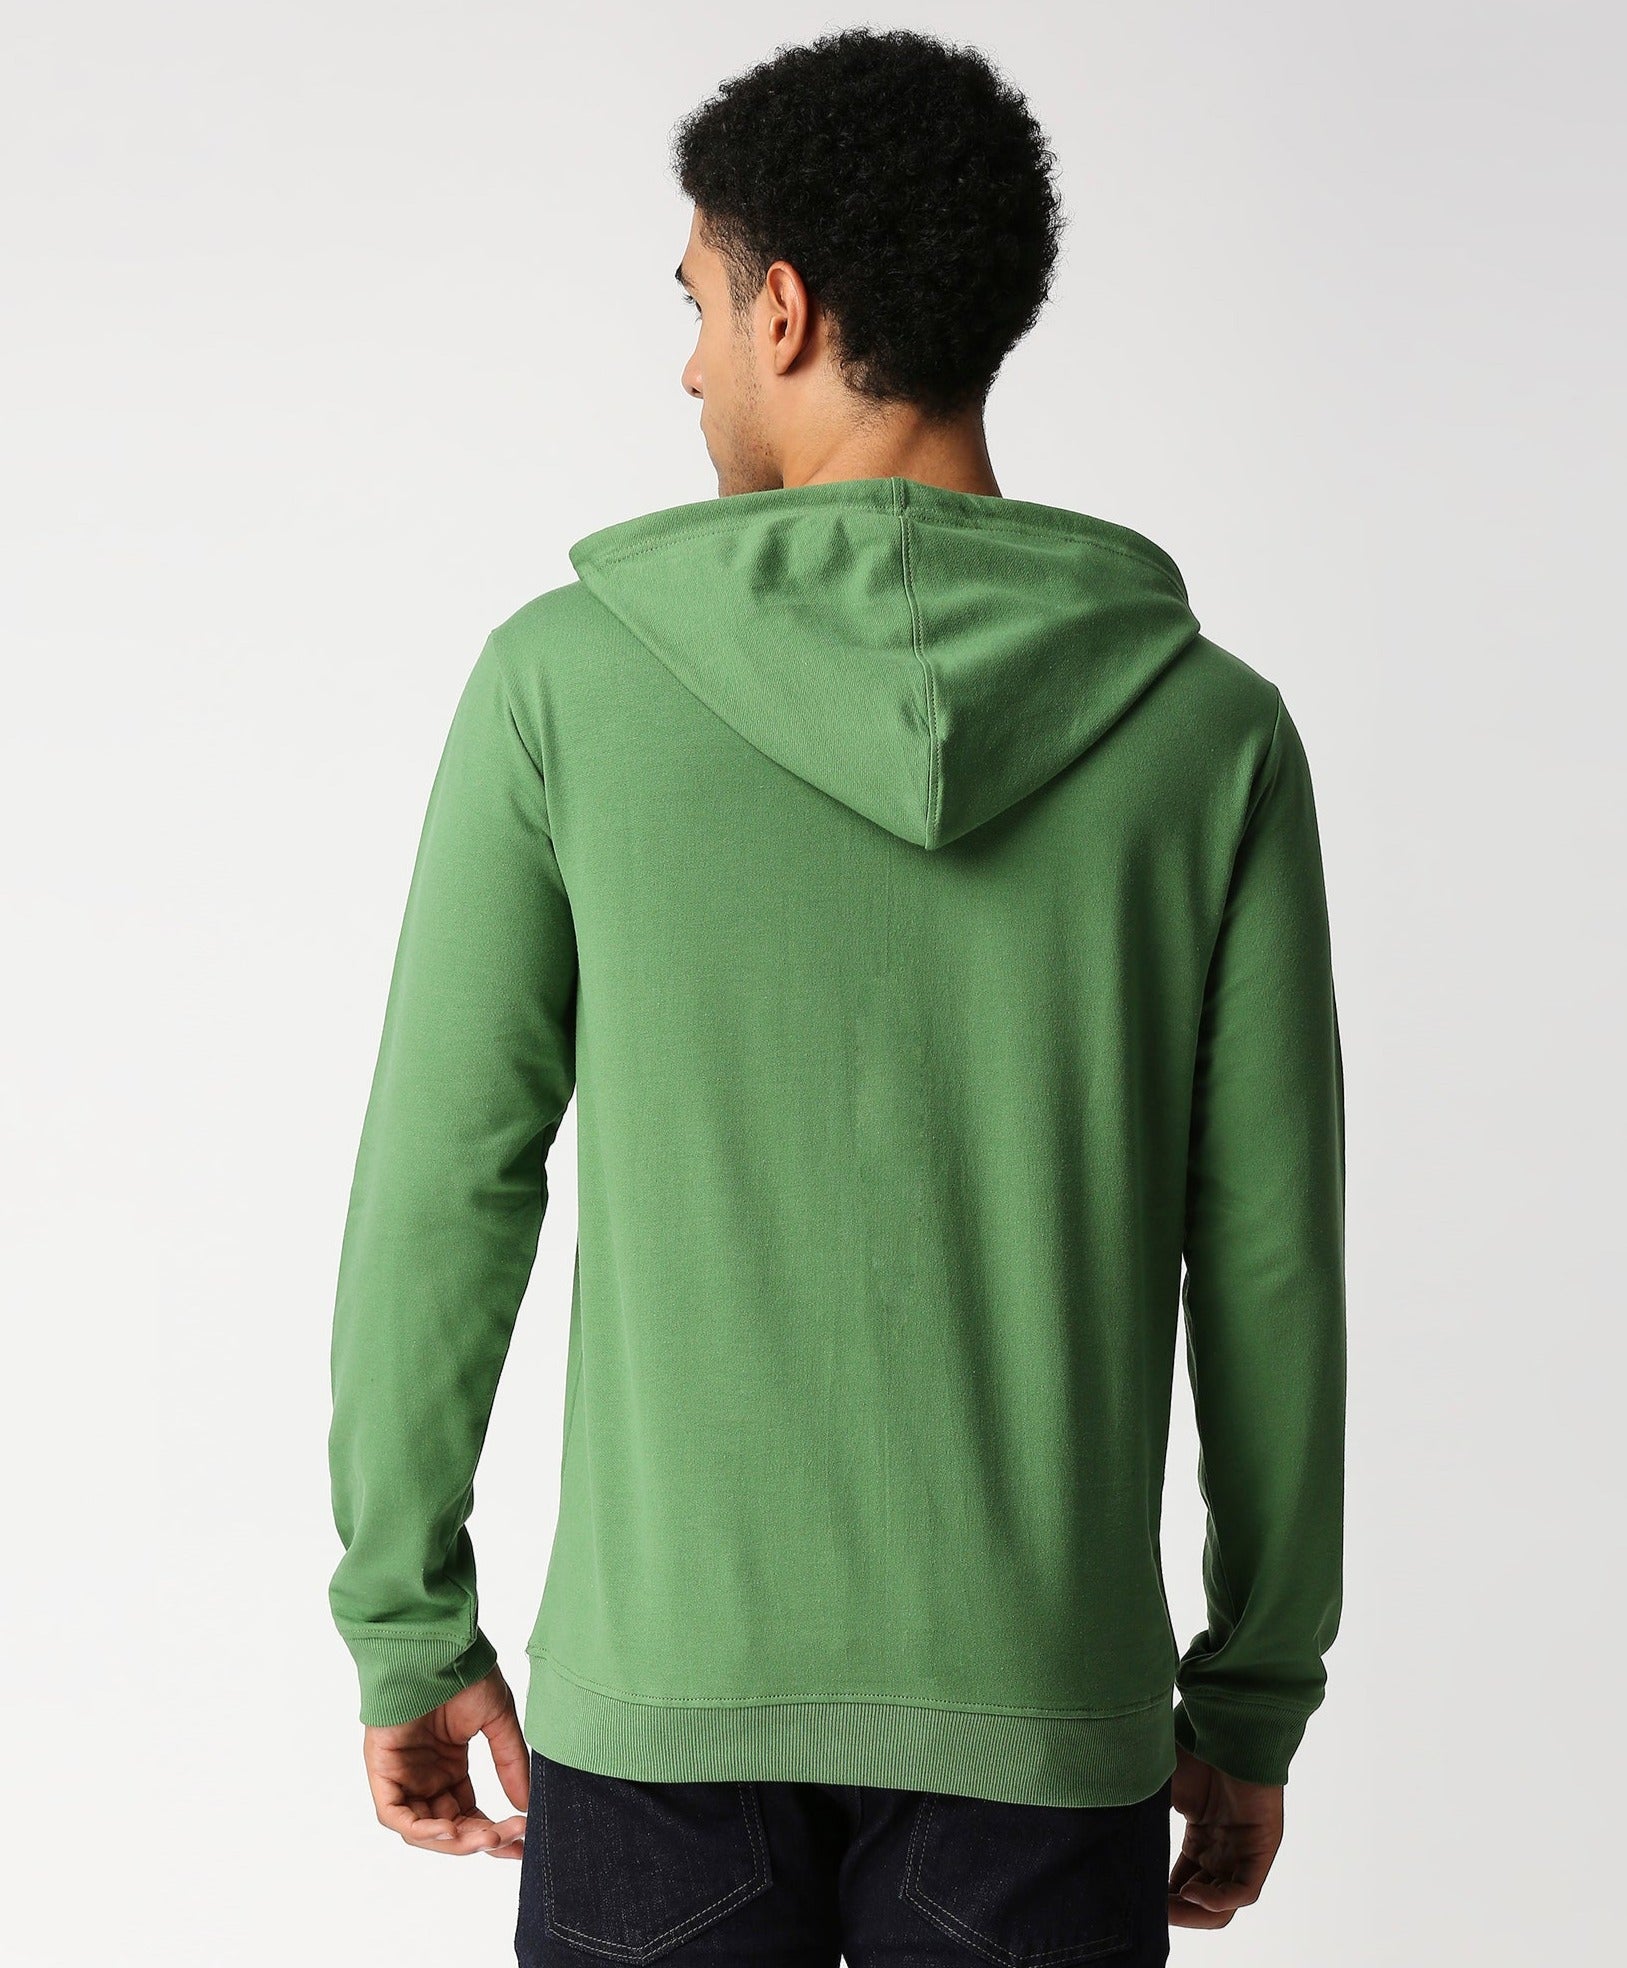 Fostino Green Plain Full Sleeves Hoodies - Fostino Shorts